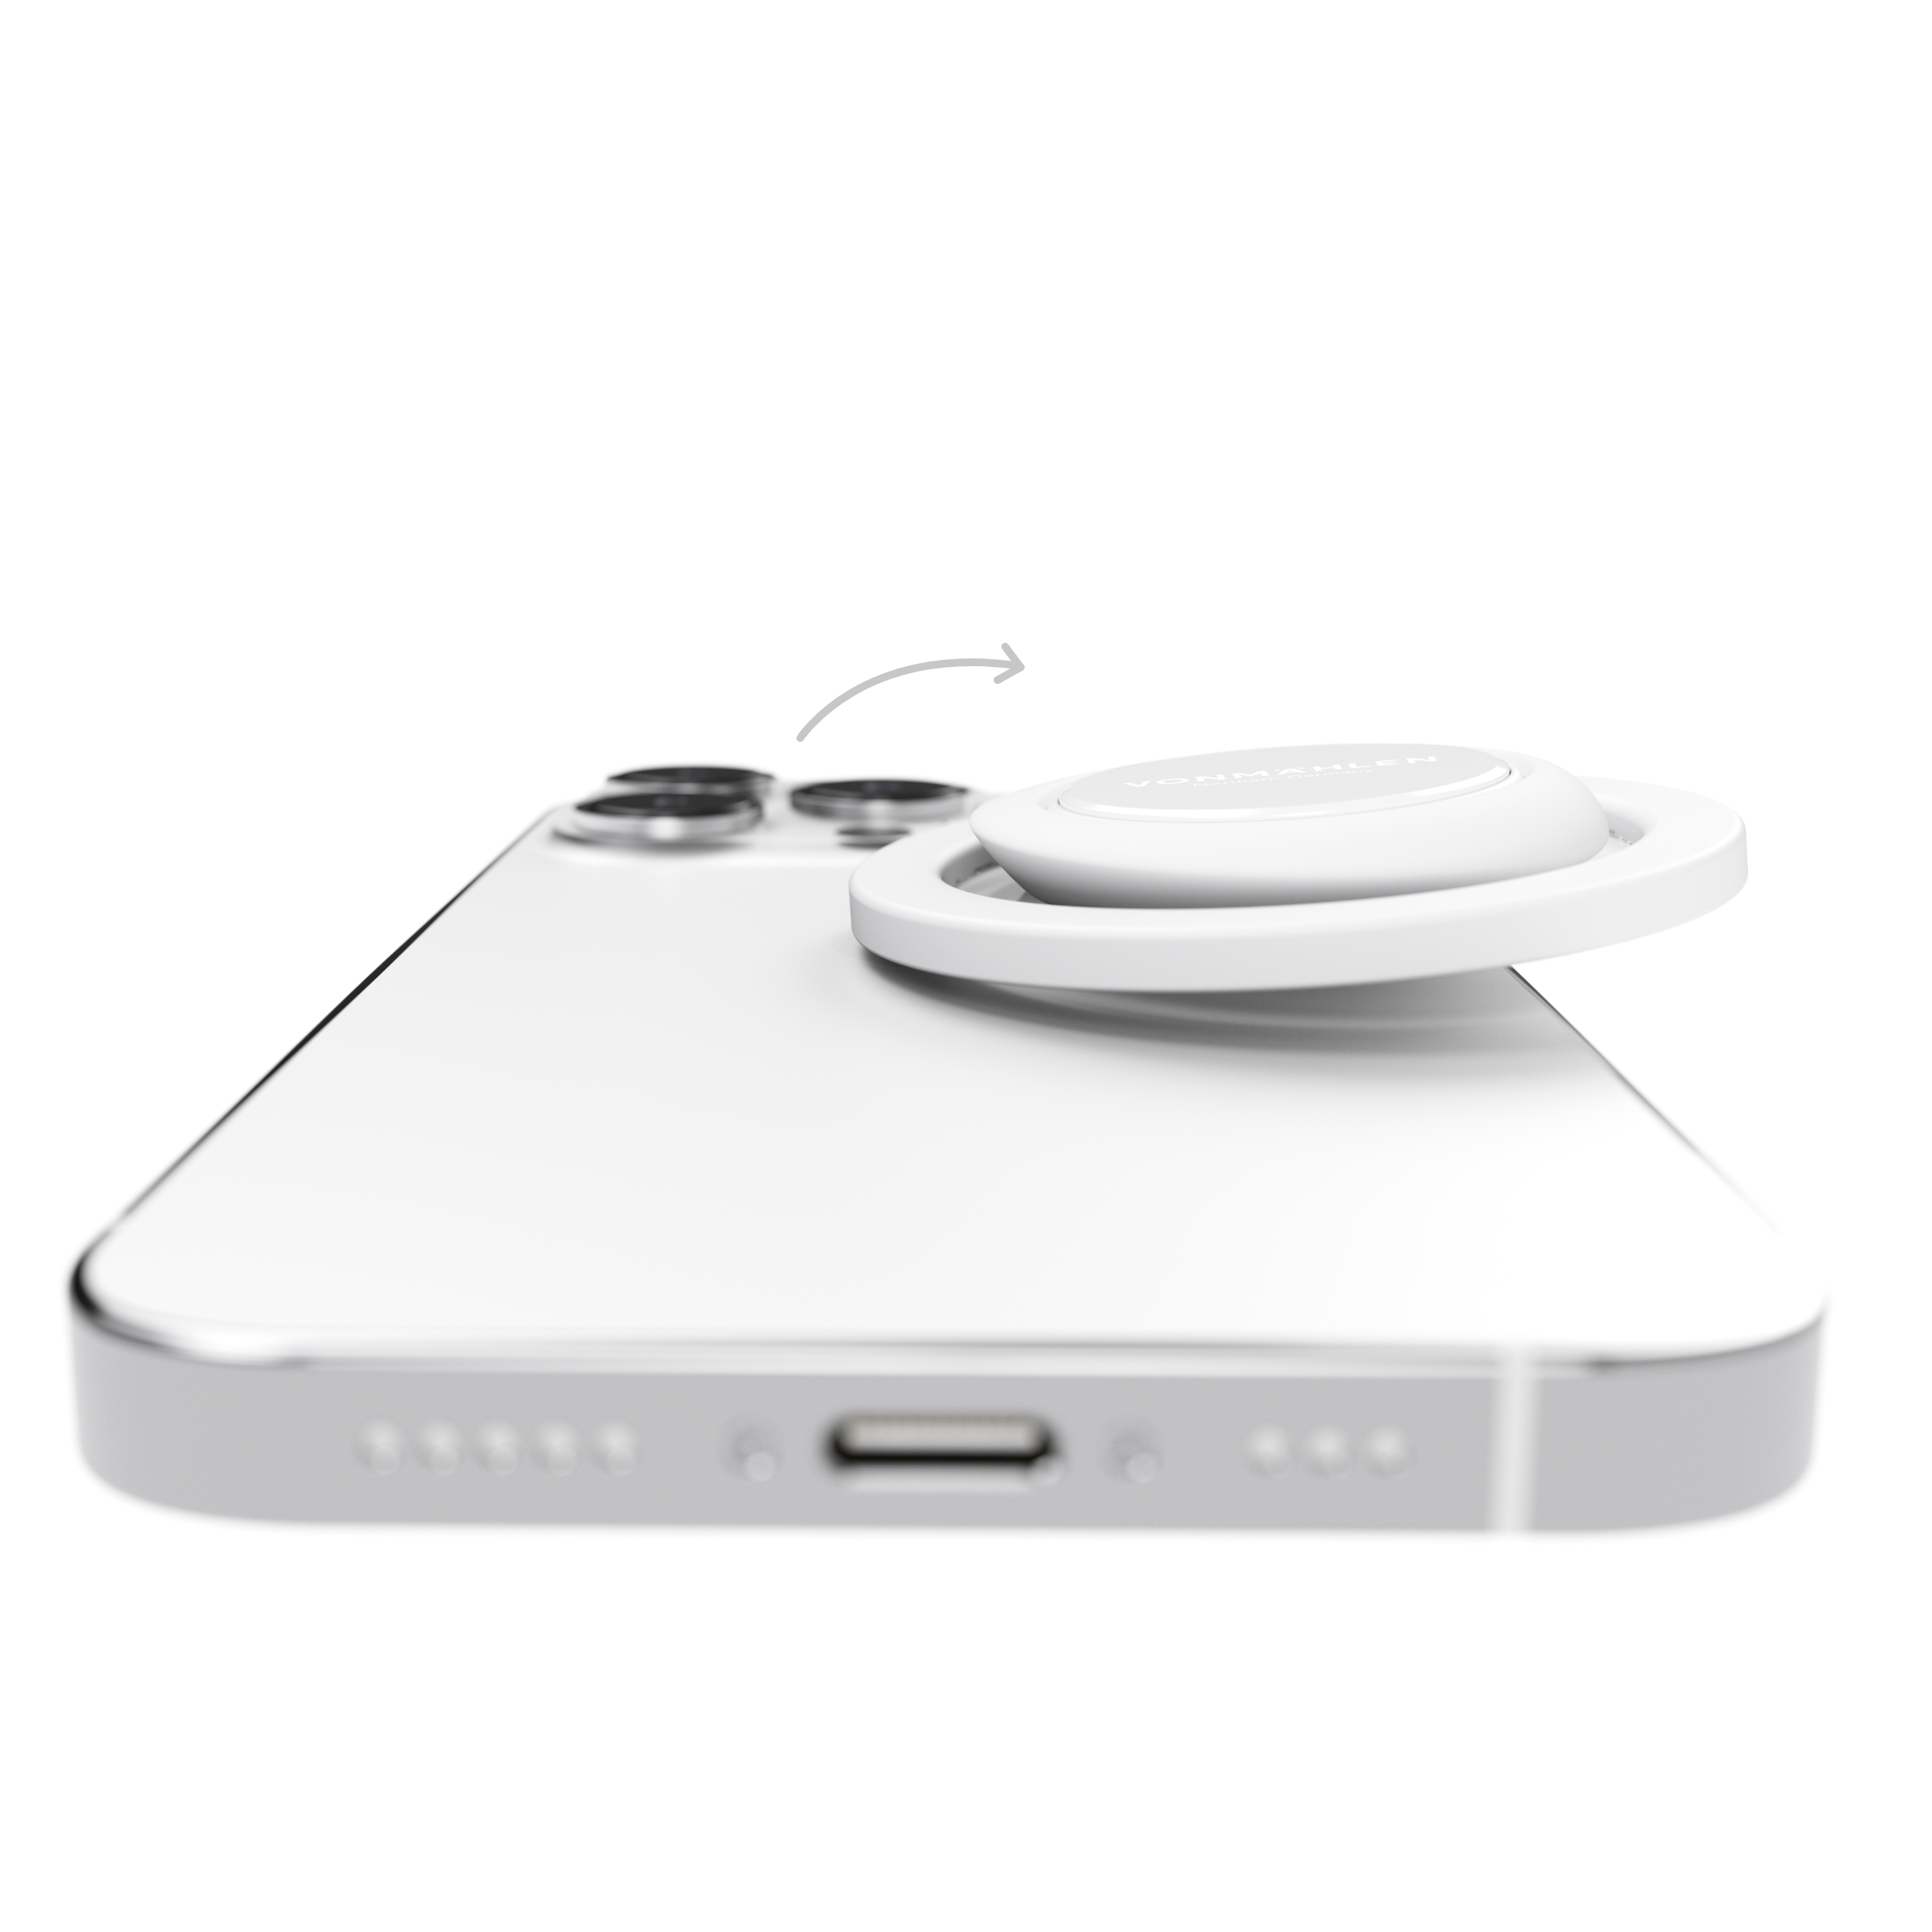 Vonmaehlen Backflip MagSafe Compatible Phone Grip/Holder - White